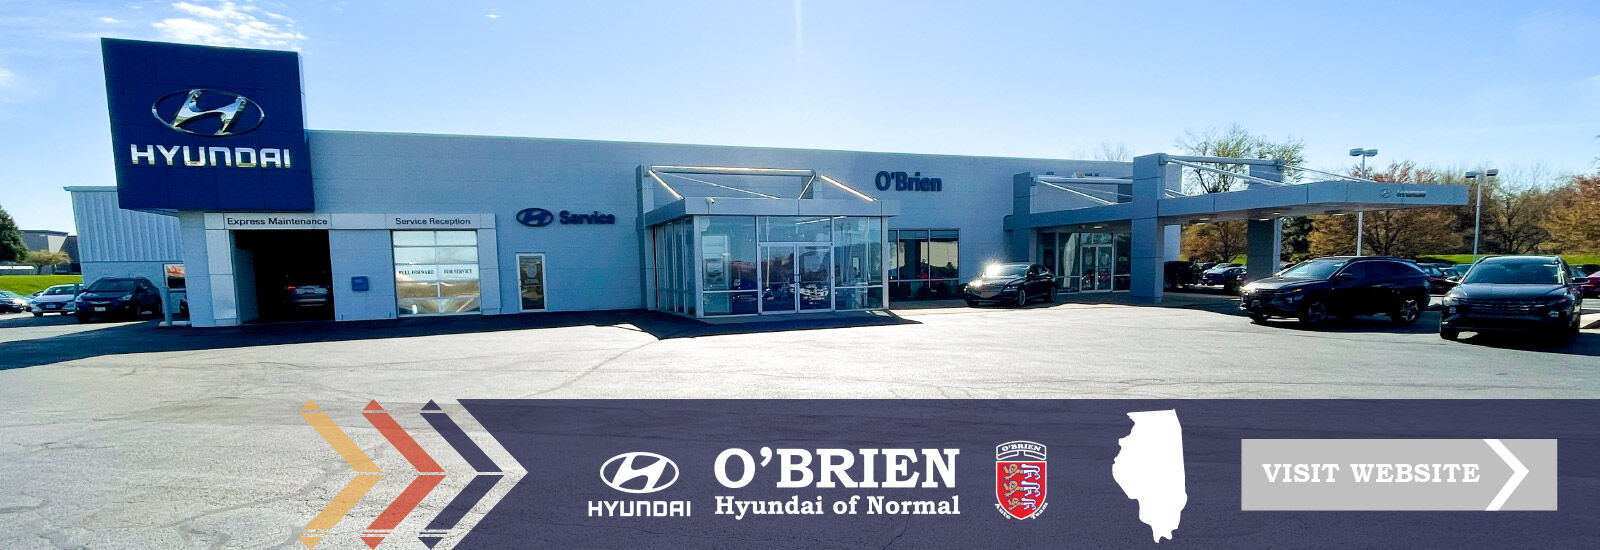 O'Brien Hyundai of Normal